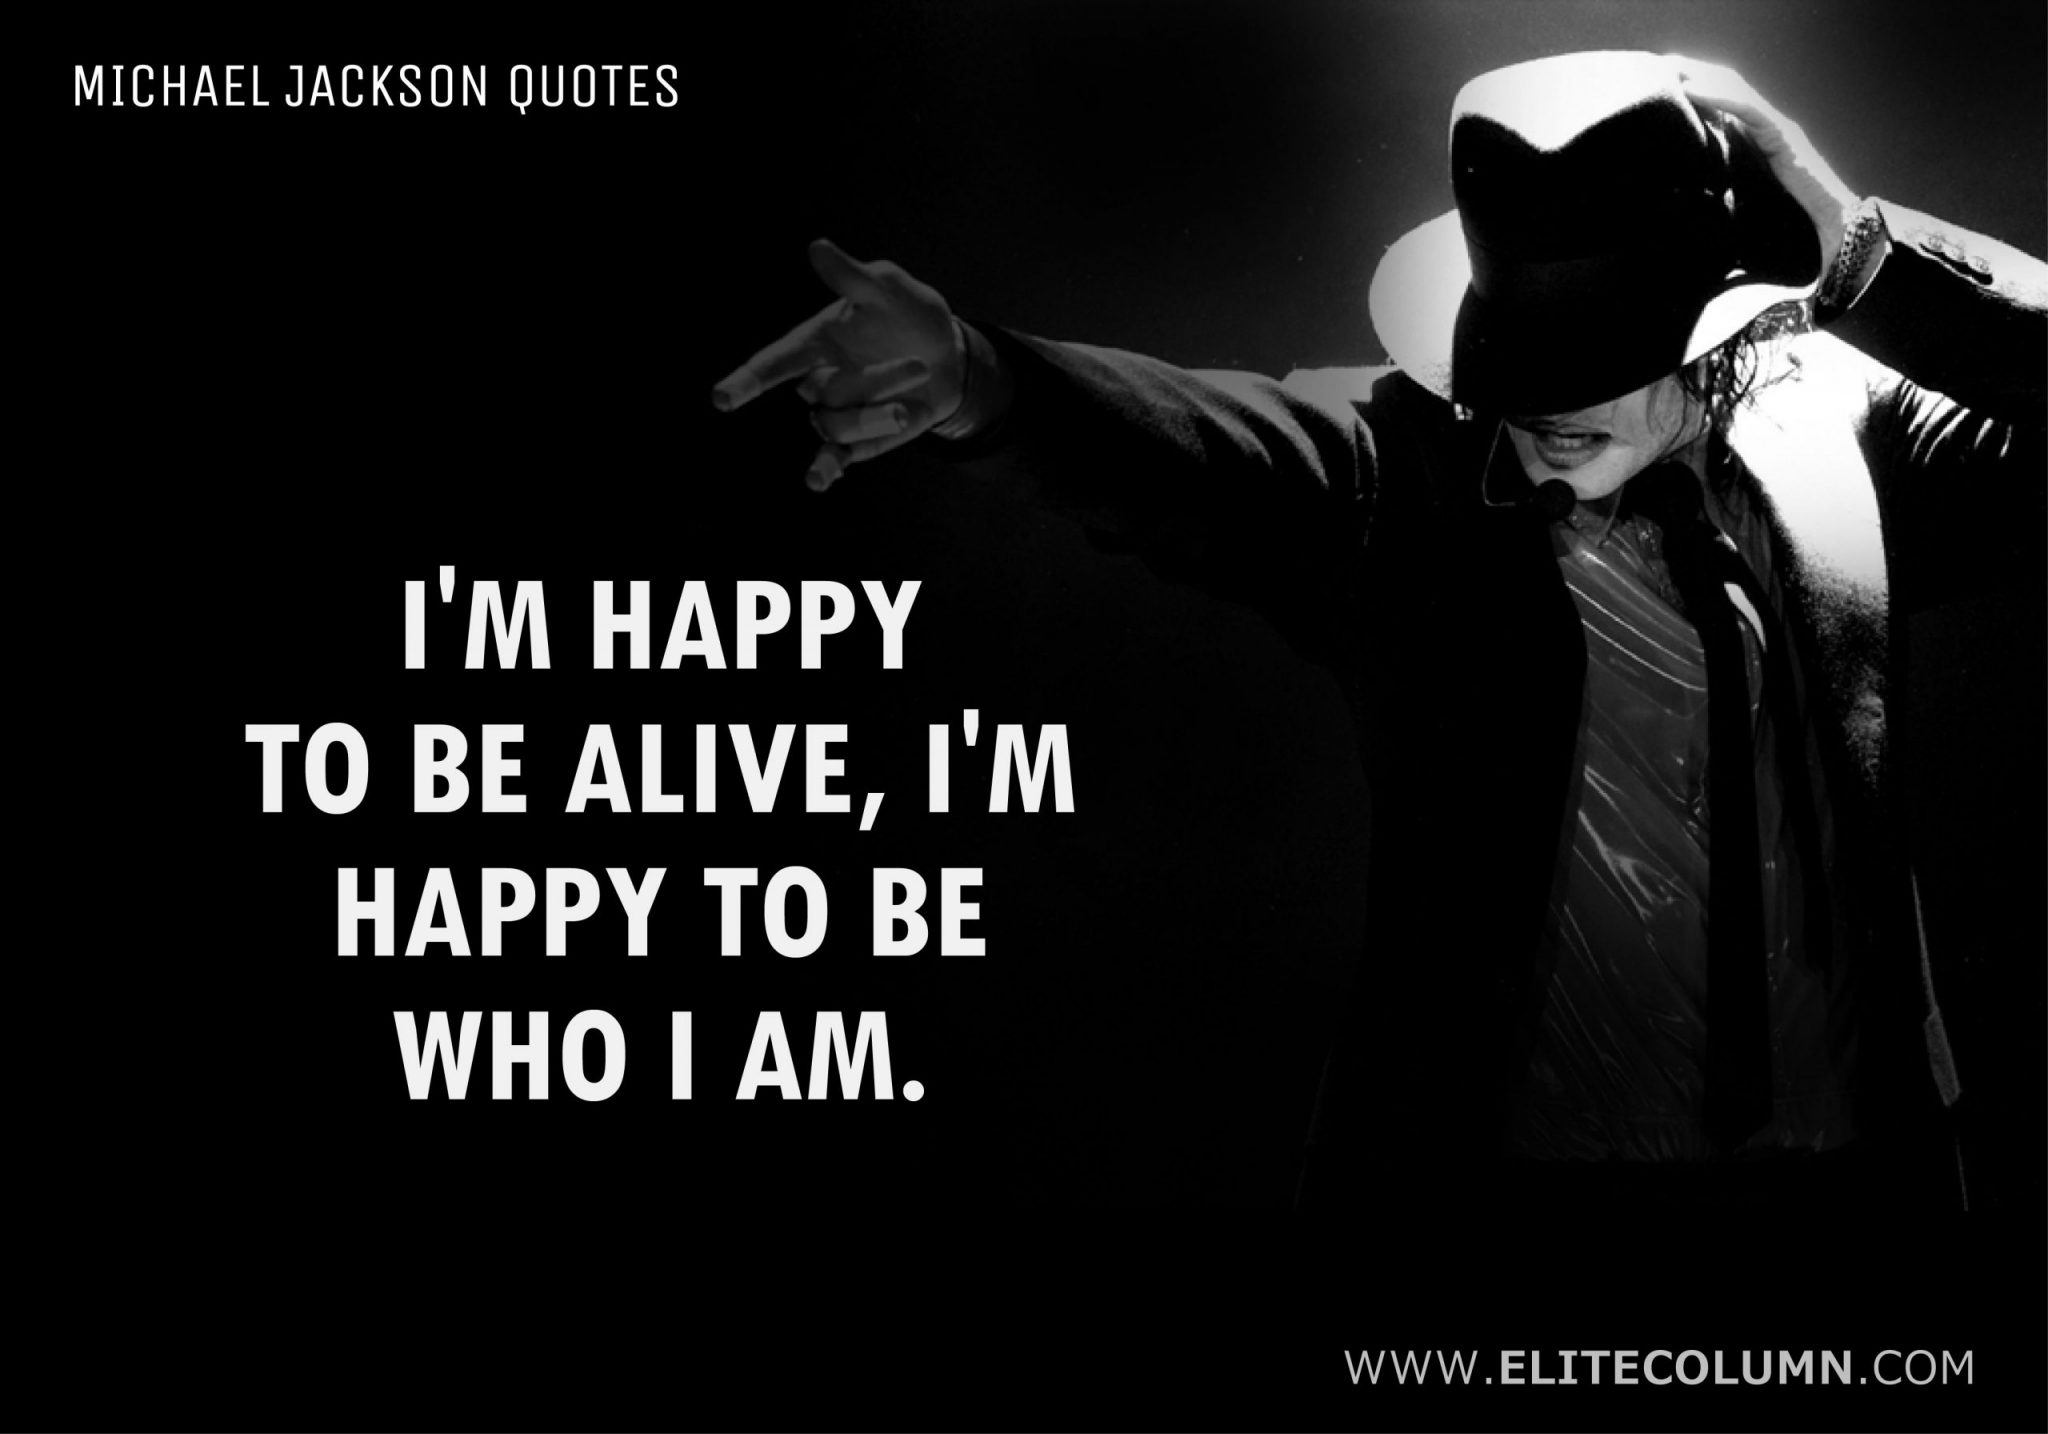 Michael Jackson Quotes (6)